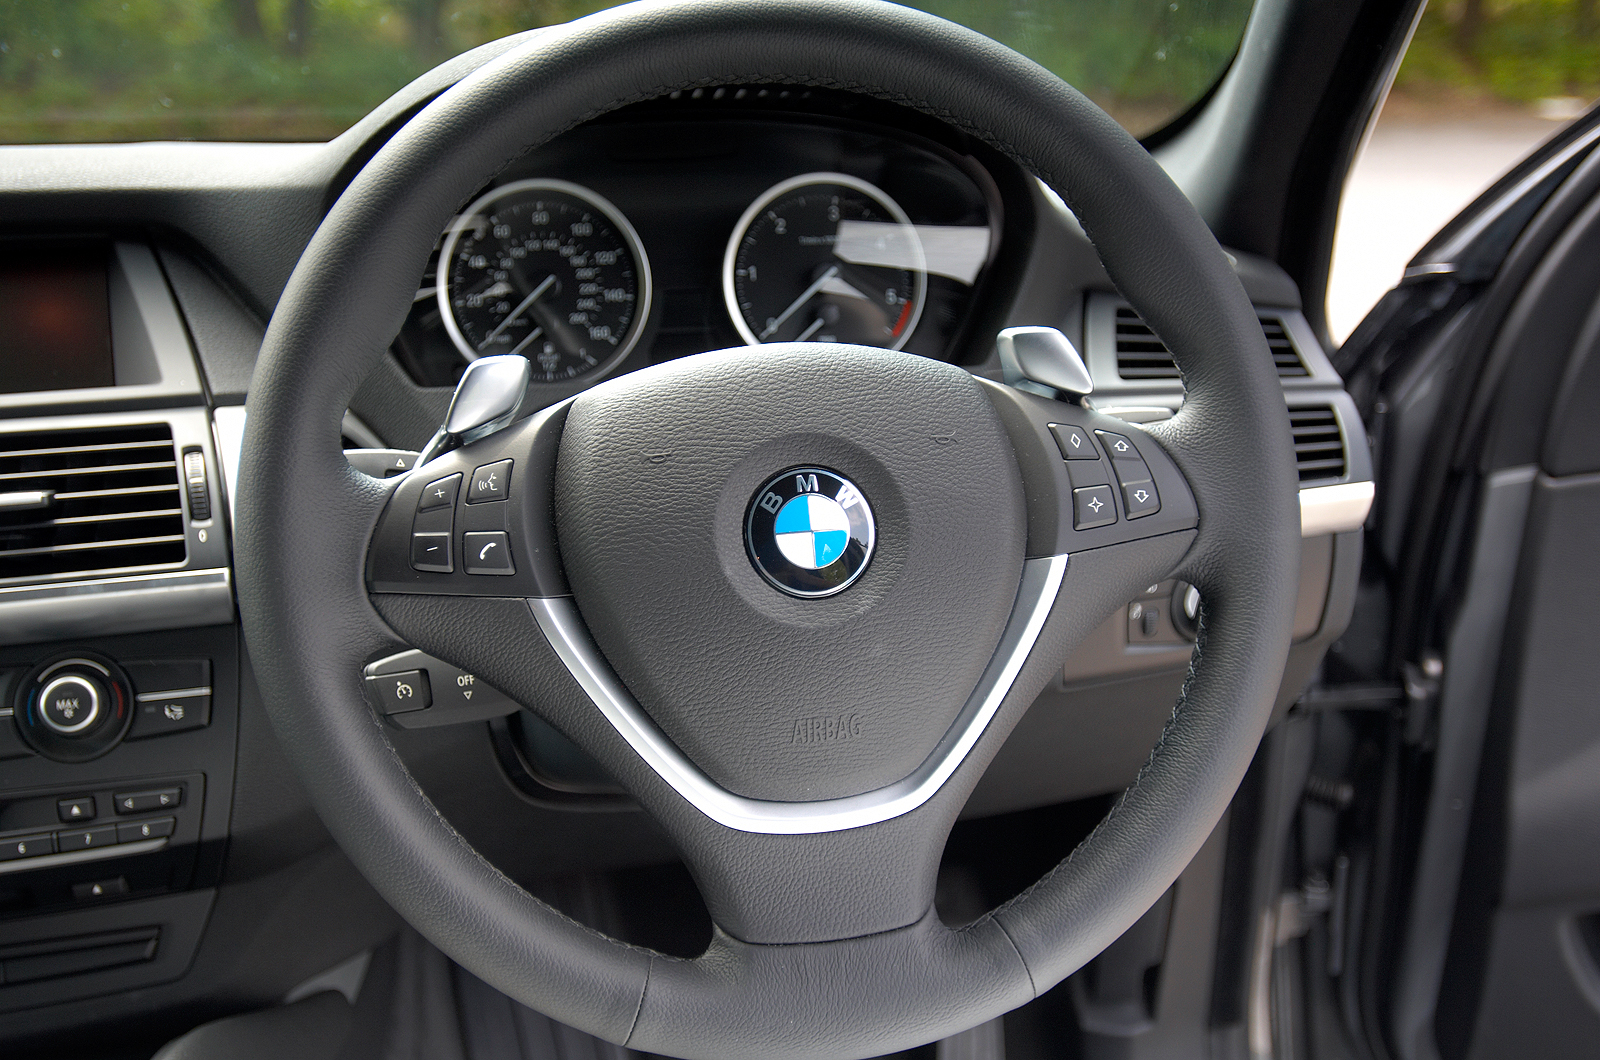 BMW X6 steering wheel